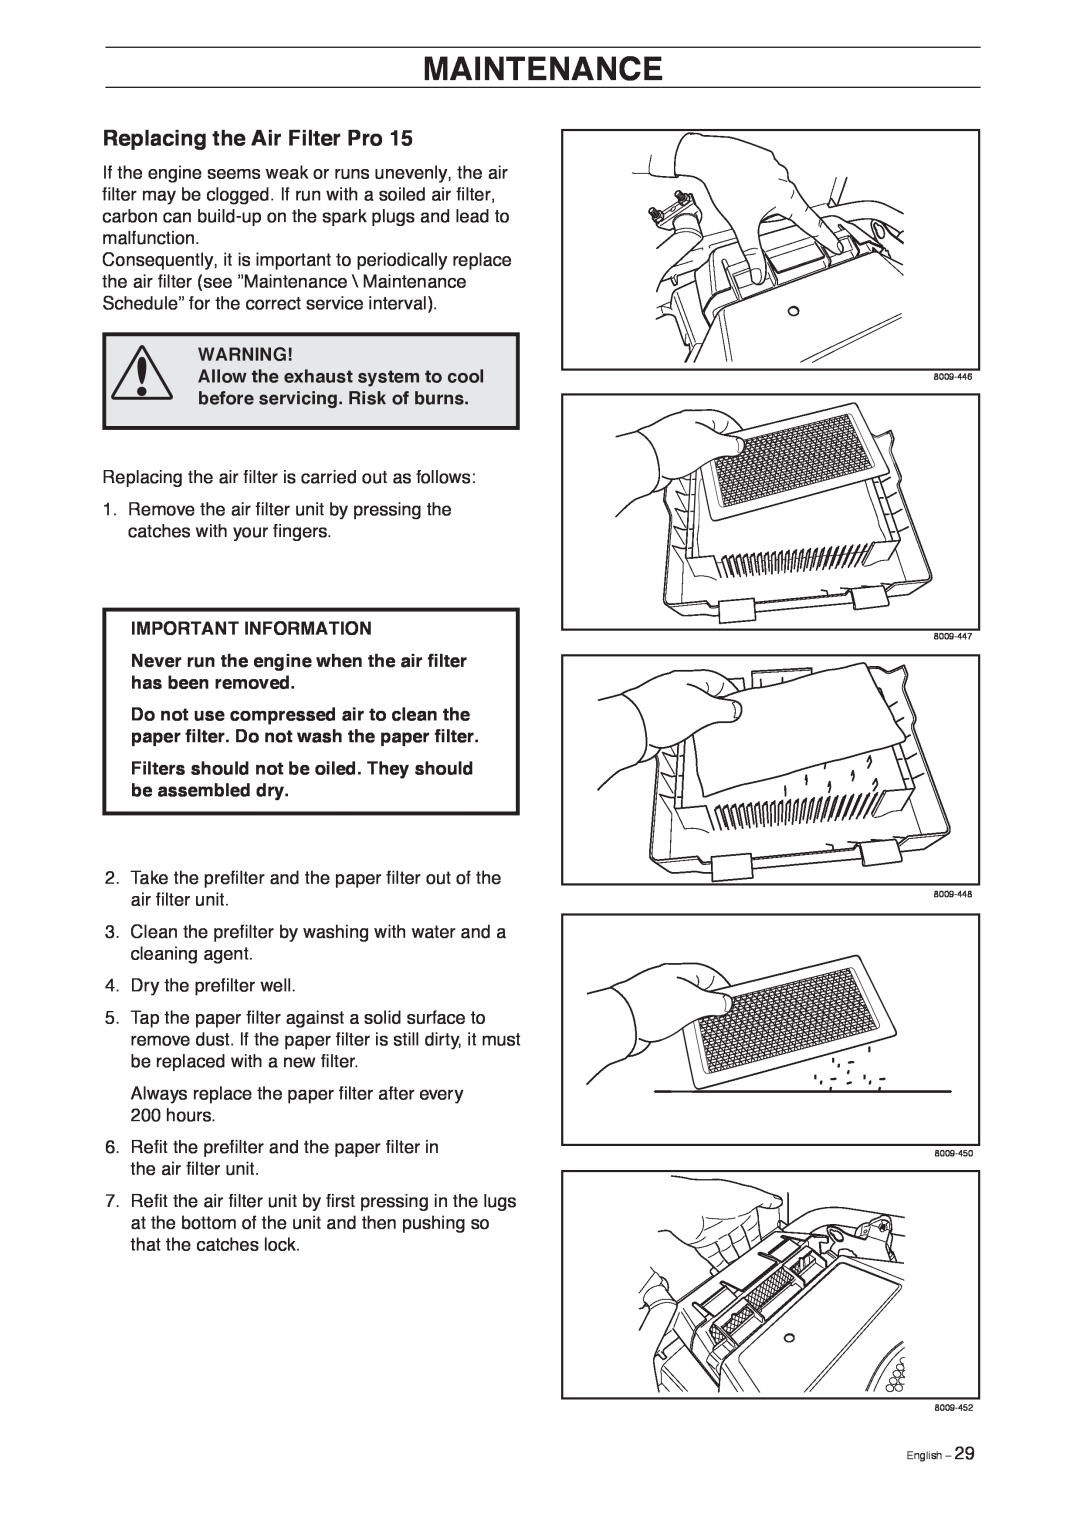 Husqvarna Pro 18 AWD manual Replacing the Air Filter Pro, Maintenance 